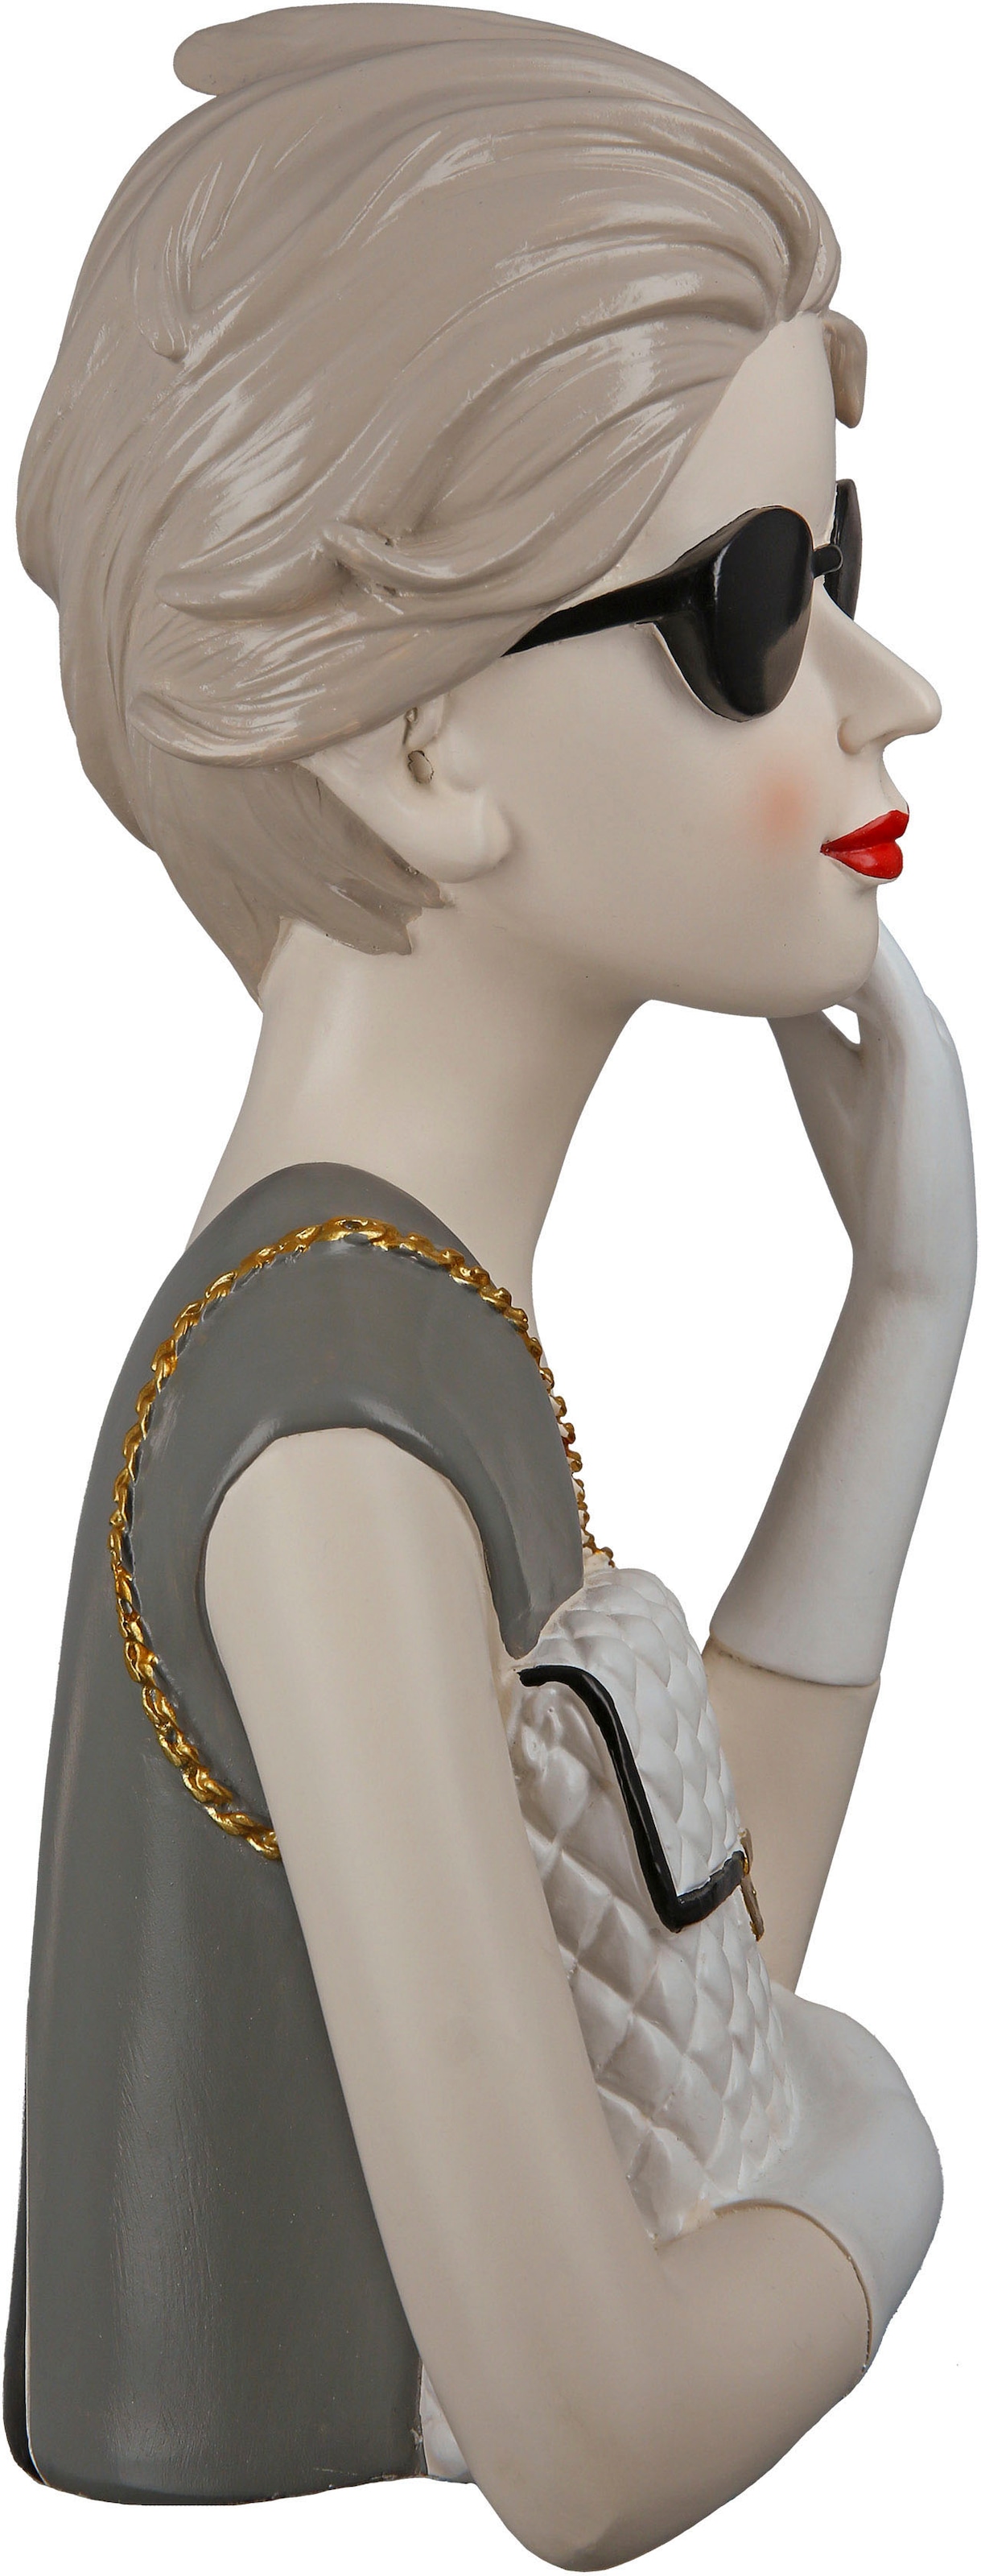 GILDE Dekofigur »Figur Lady mit Handtasche« bestellen online